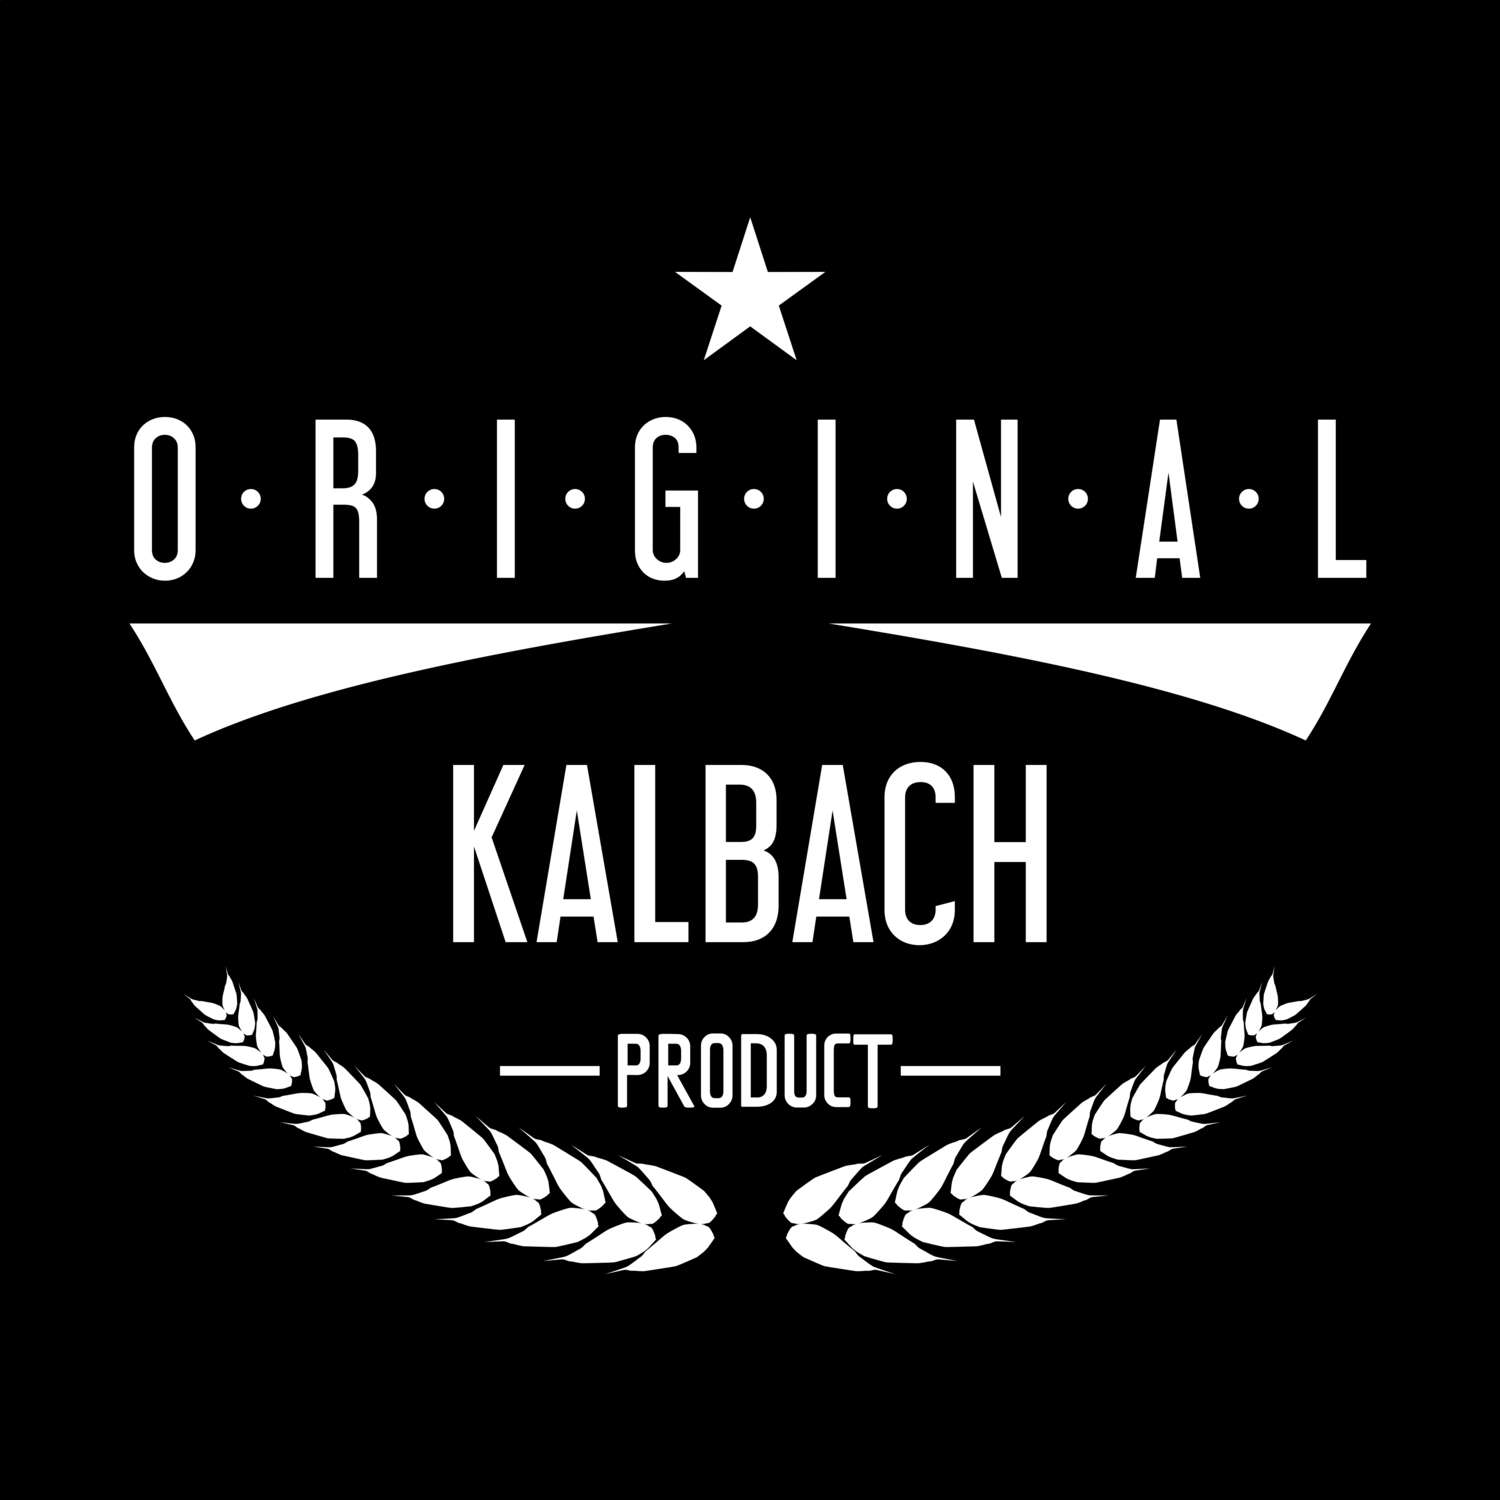 Kalbach T-Shirt »Original Product«